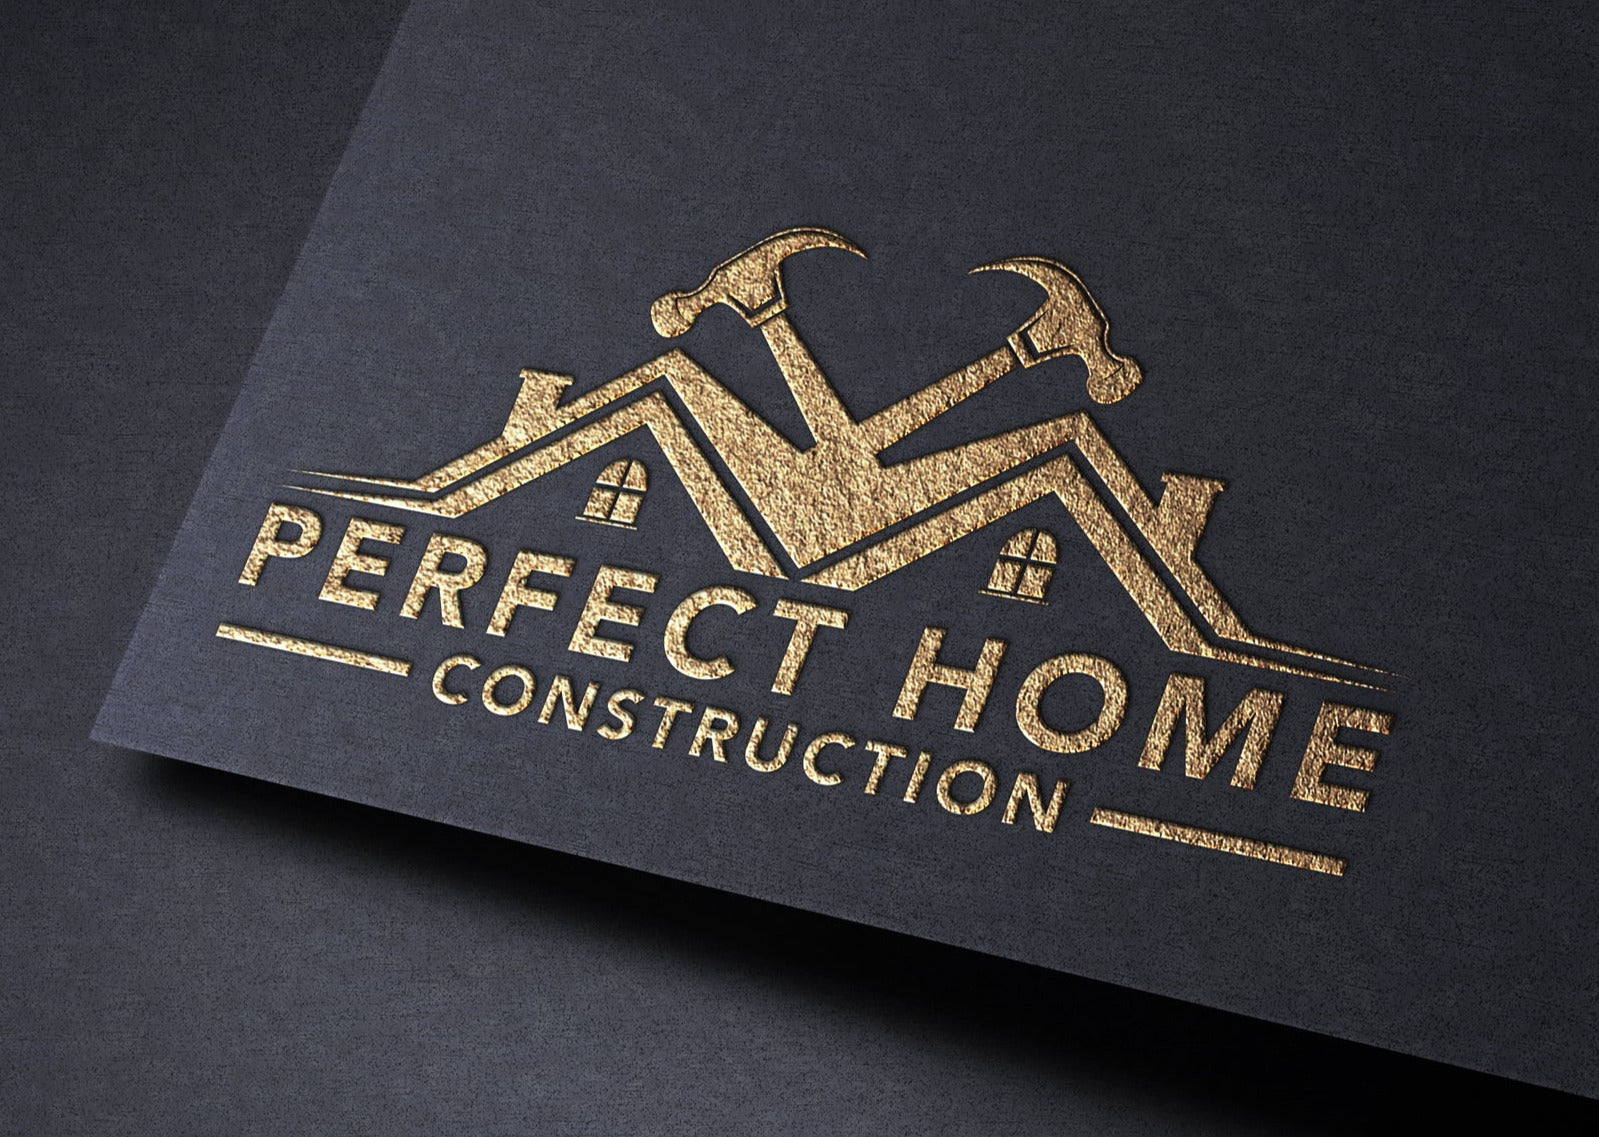 Logo Design - Roofing Business | Construction Company | Home Decor | Hammer Design | Construction